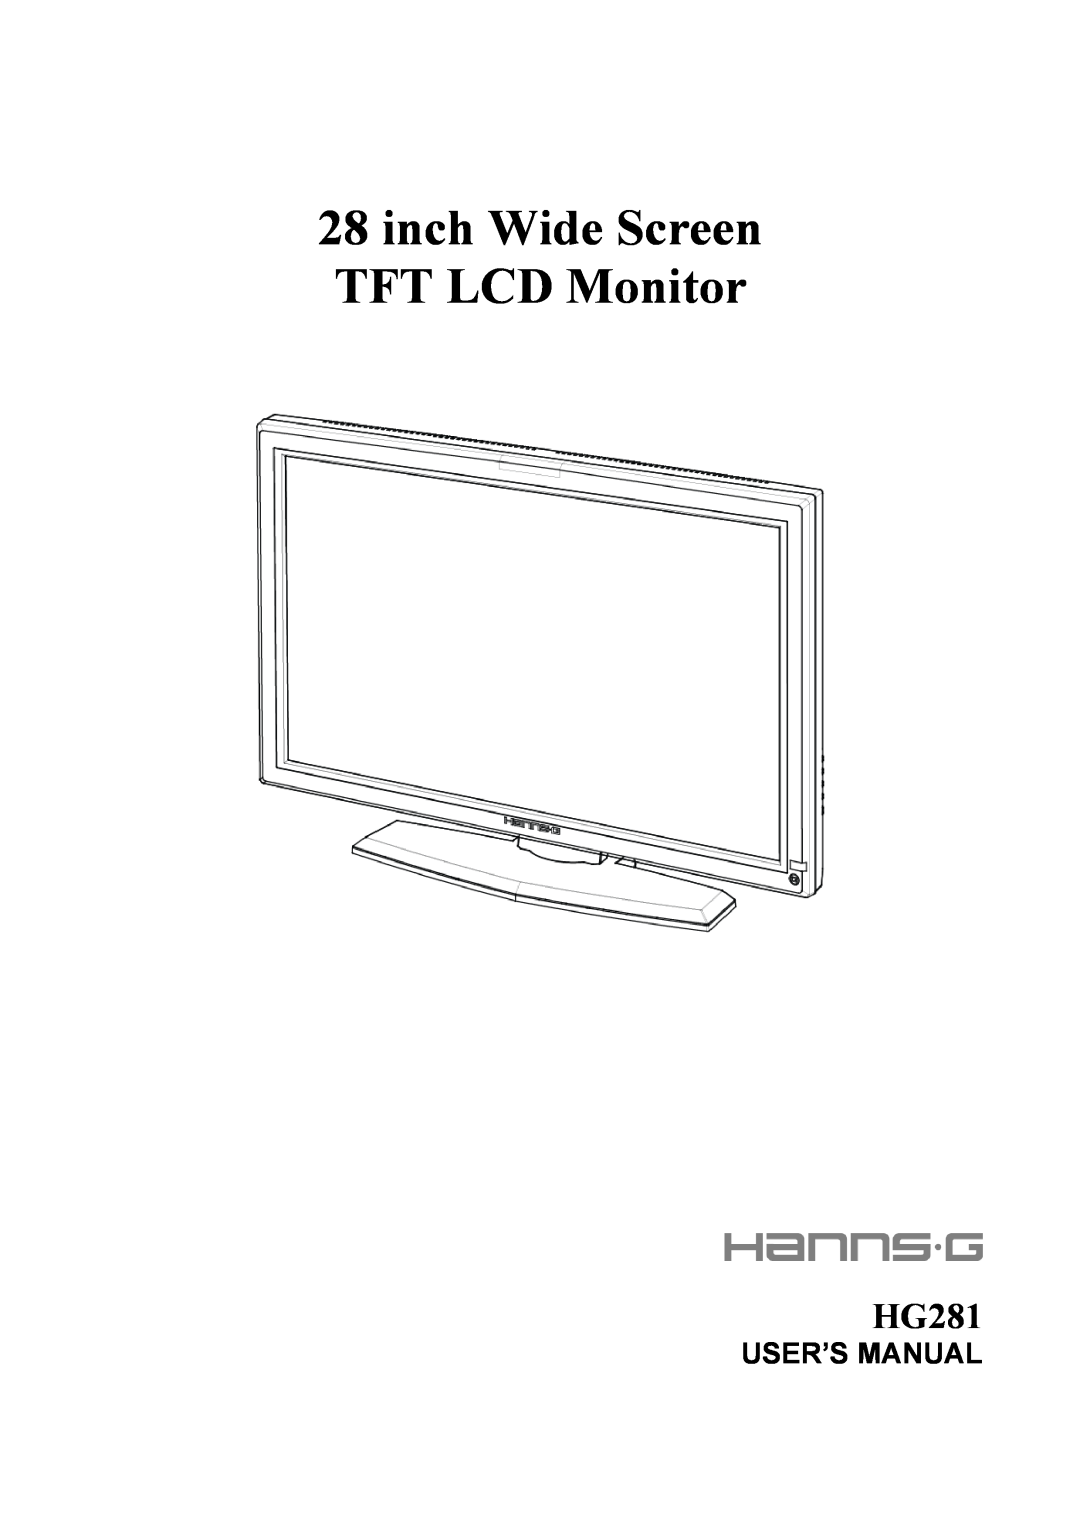 Hanns.G HG281 manual HSG1040 